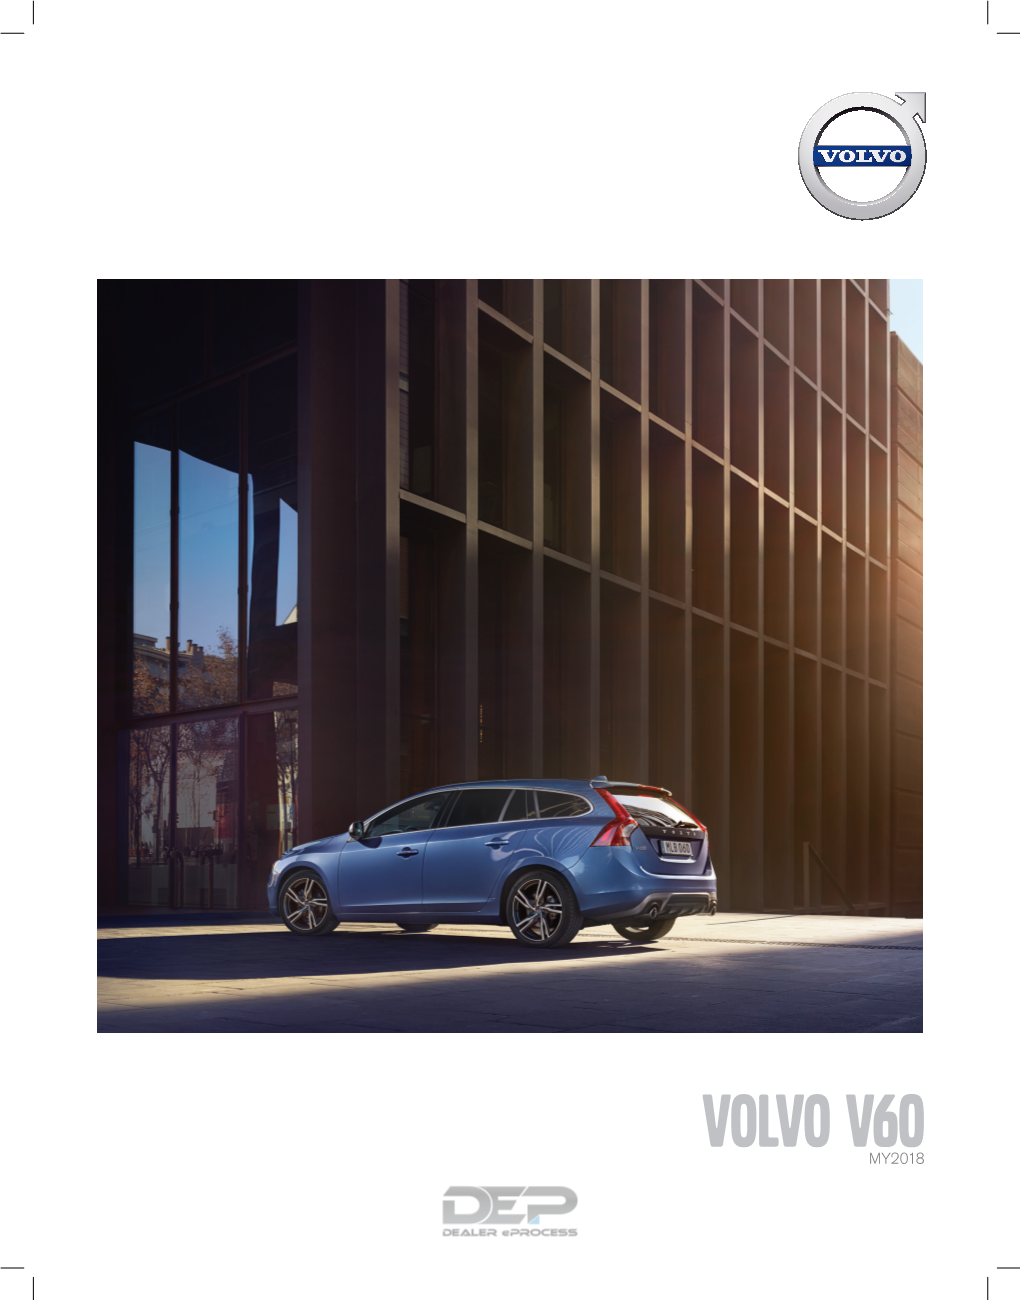 MY2018 Volvo V60 EXPRESS YOURSELF | 3